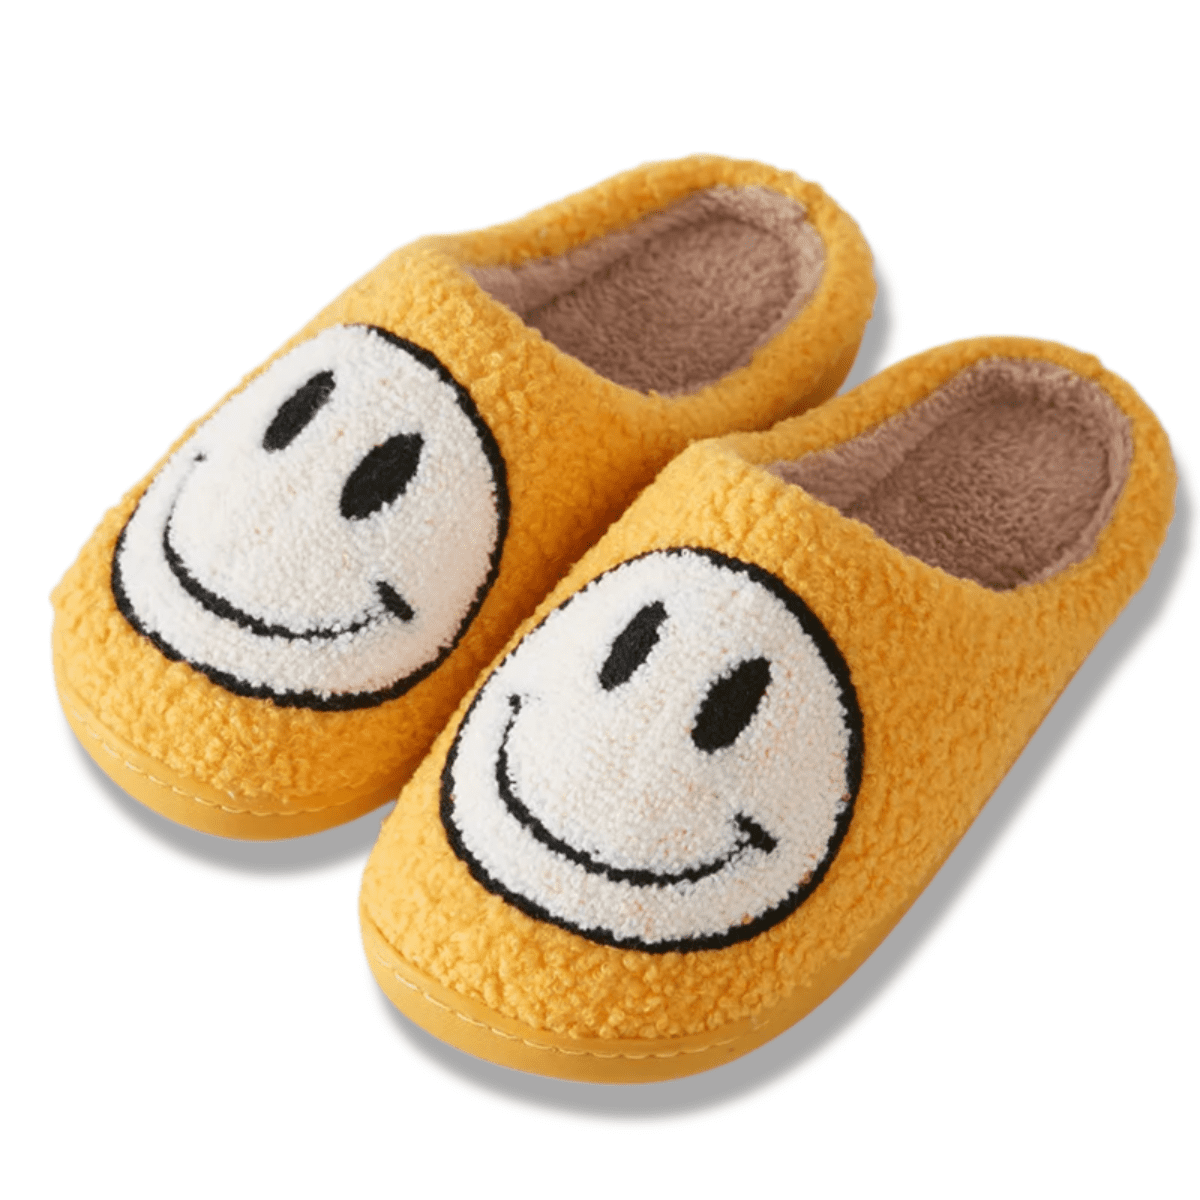 Minimer Krage Lave Smiley Face Slippers (Unisex), Slip Resistant, Slide-On House Shoes, Yellow  (US Womens 8 / Mens 6.5) - Walmart.com